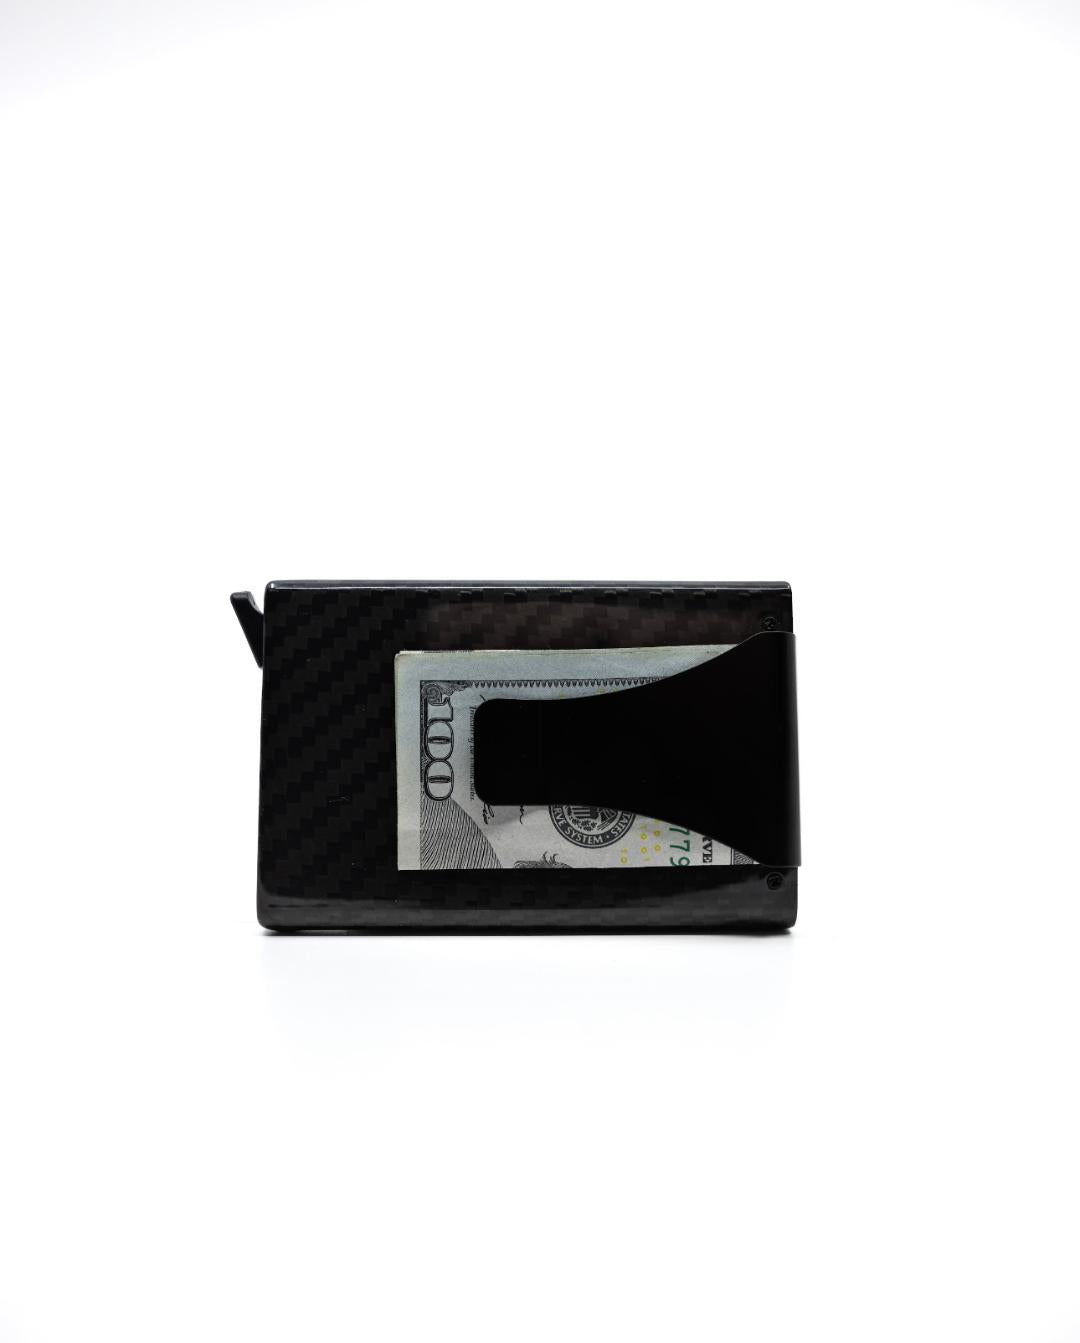 Carbon Fiber Push Card Wallet With Money Clip